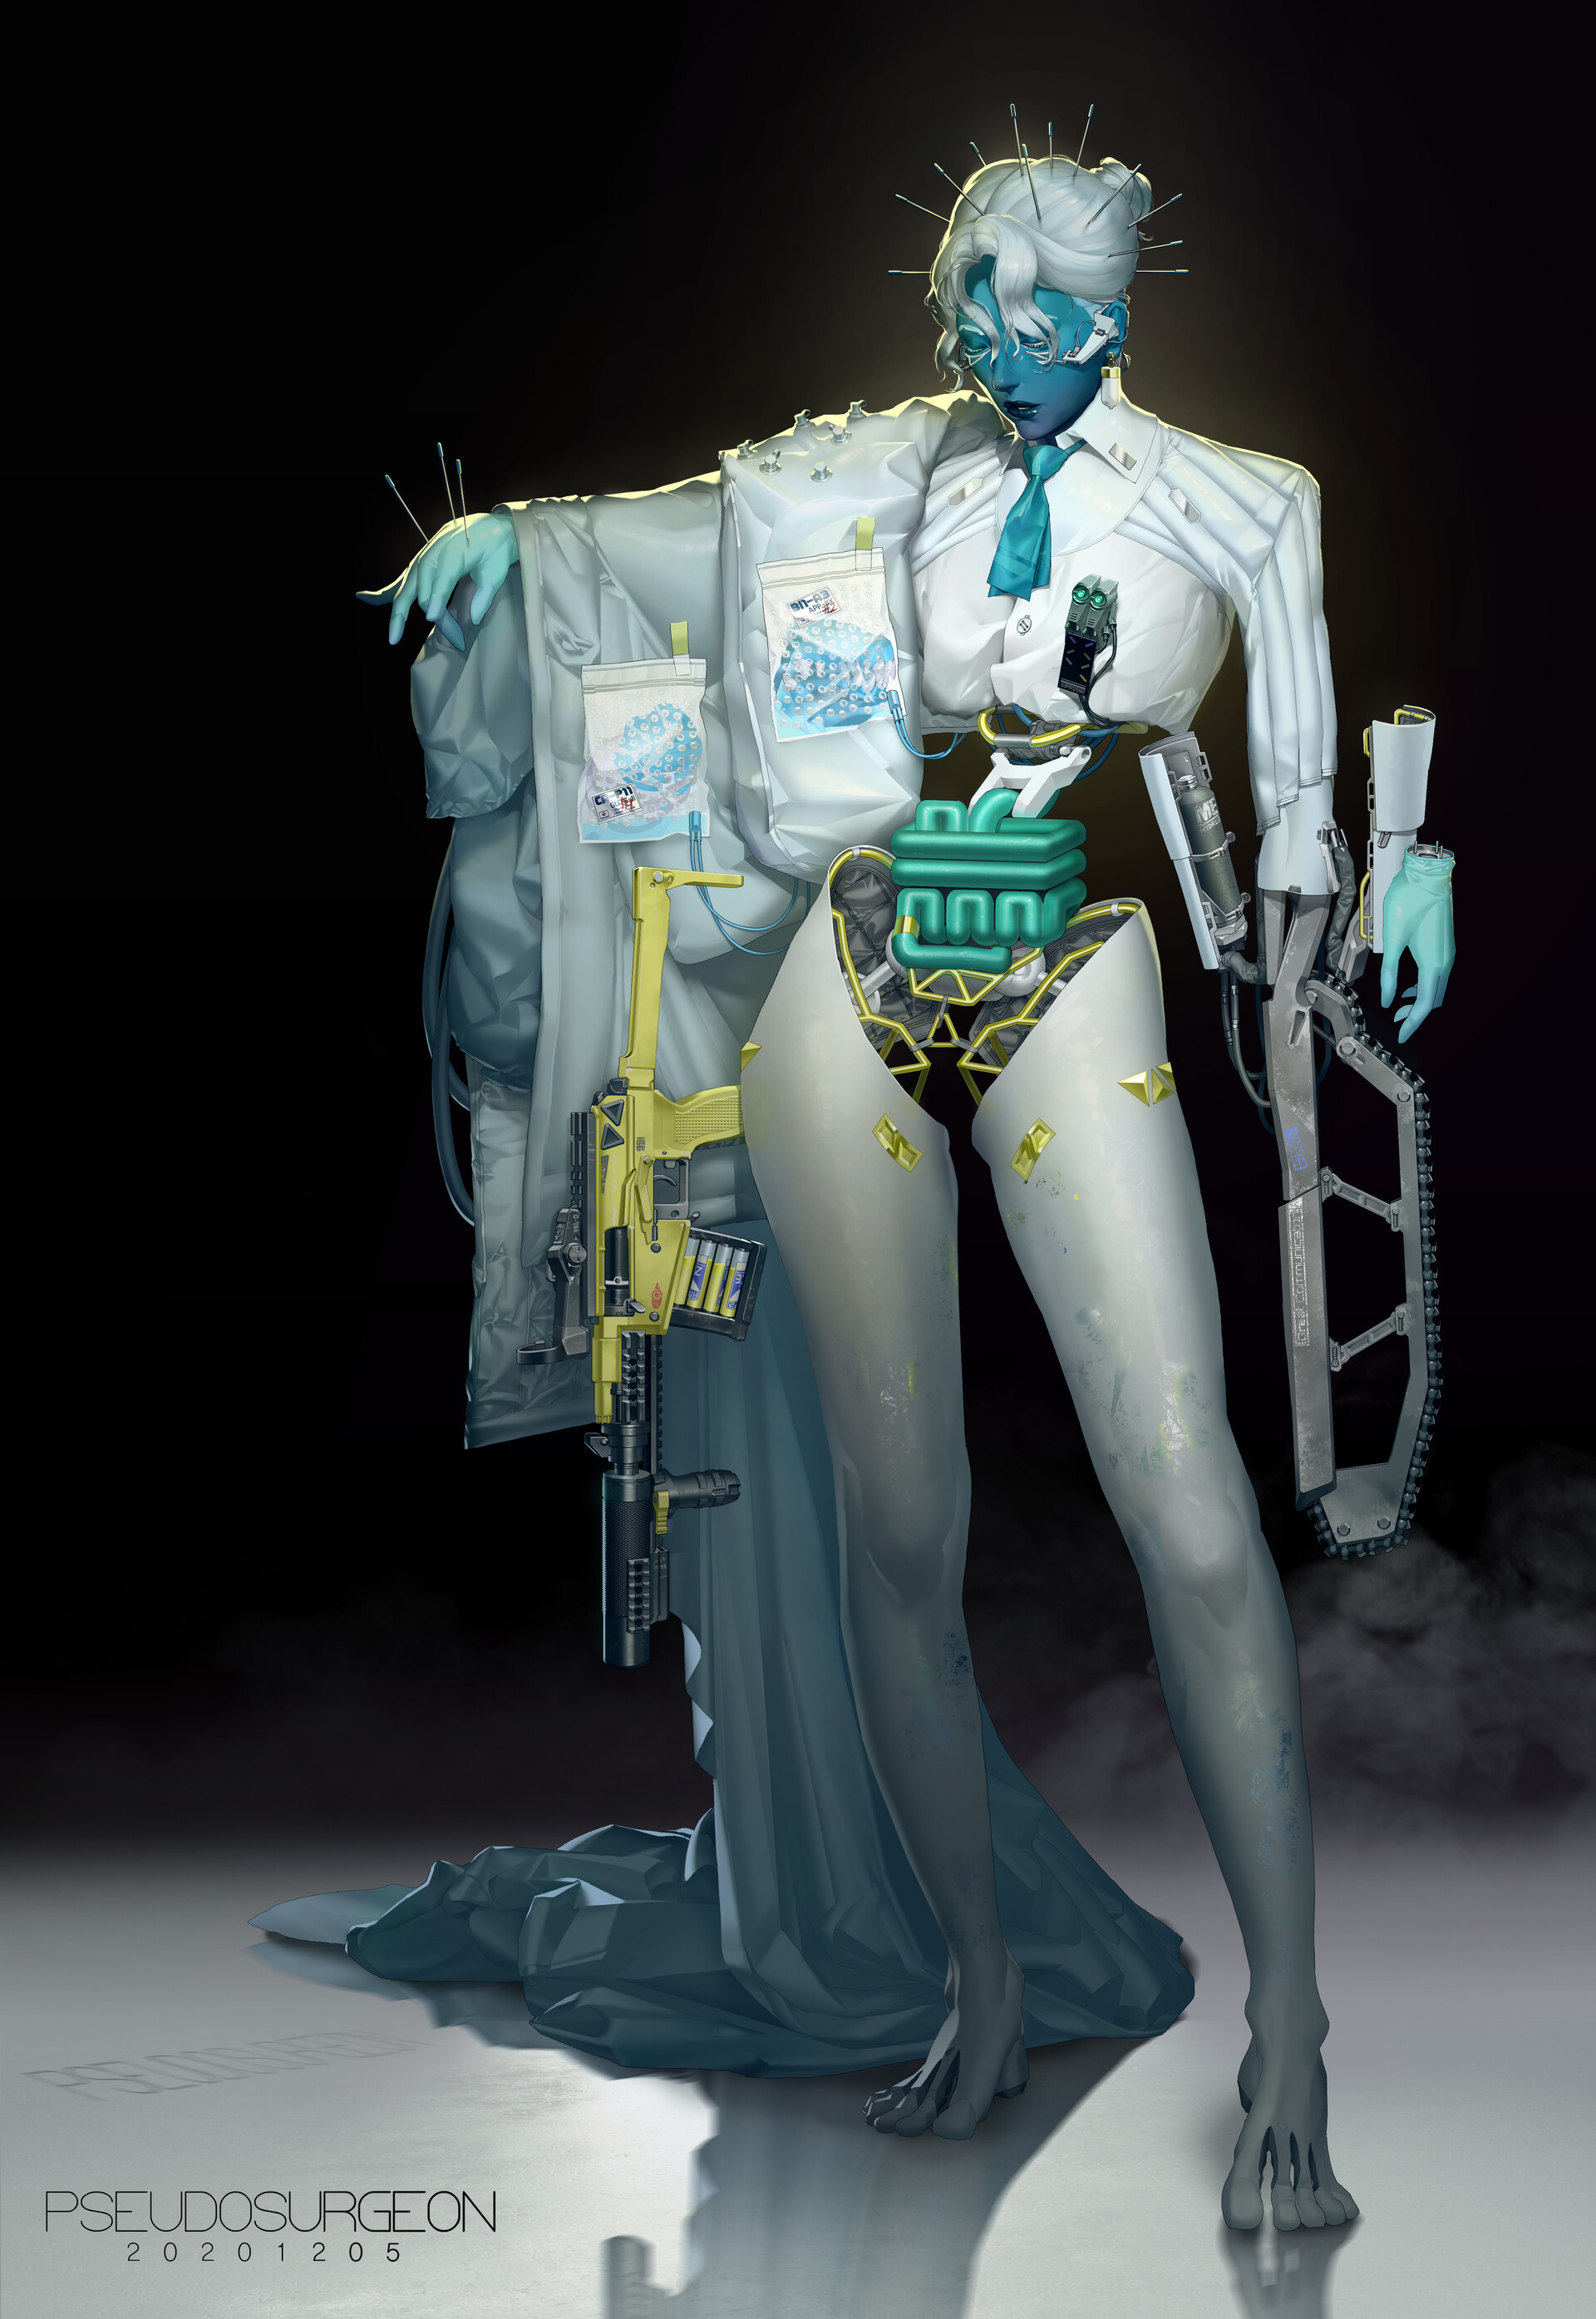 Park Jin Kwang Women Machine Cyborg Simple Background Black Background Digital Art Science Fiction W 1920x2789